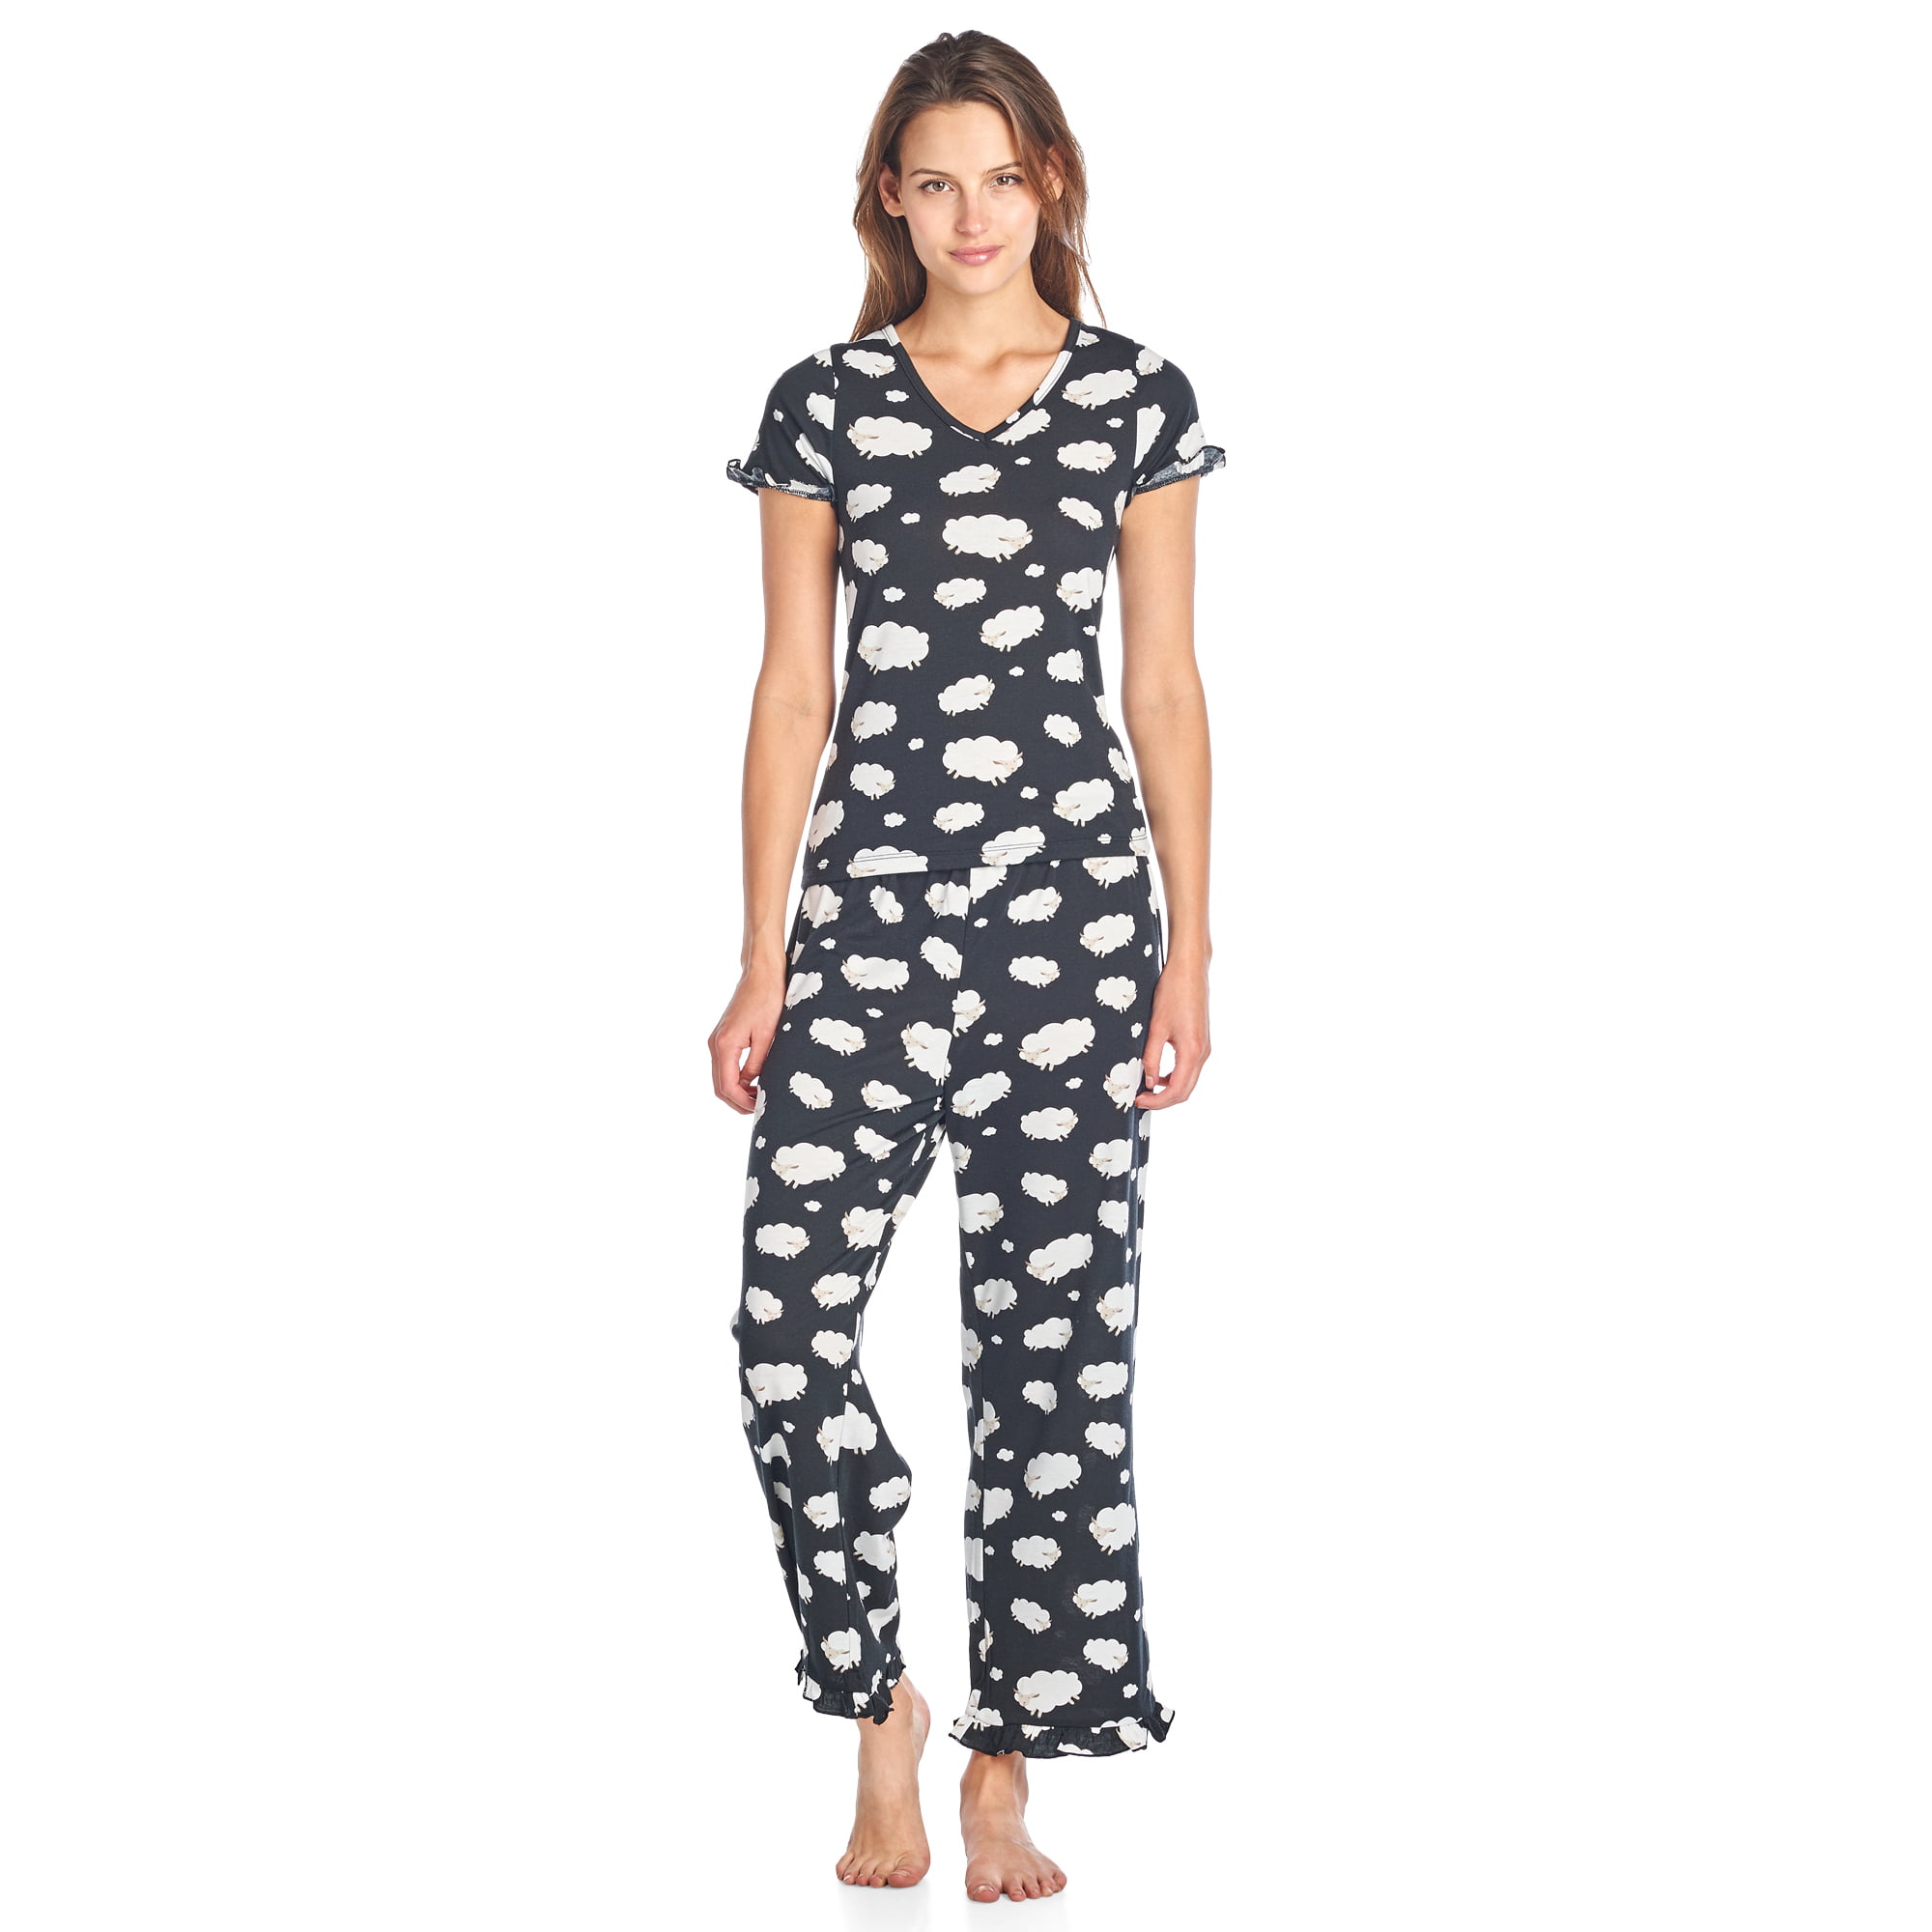 BHPJ By Bedhead Pajamas Women's Soft Knit Ruffle Short Sleeve Capri ...